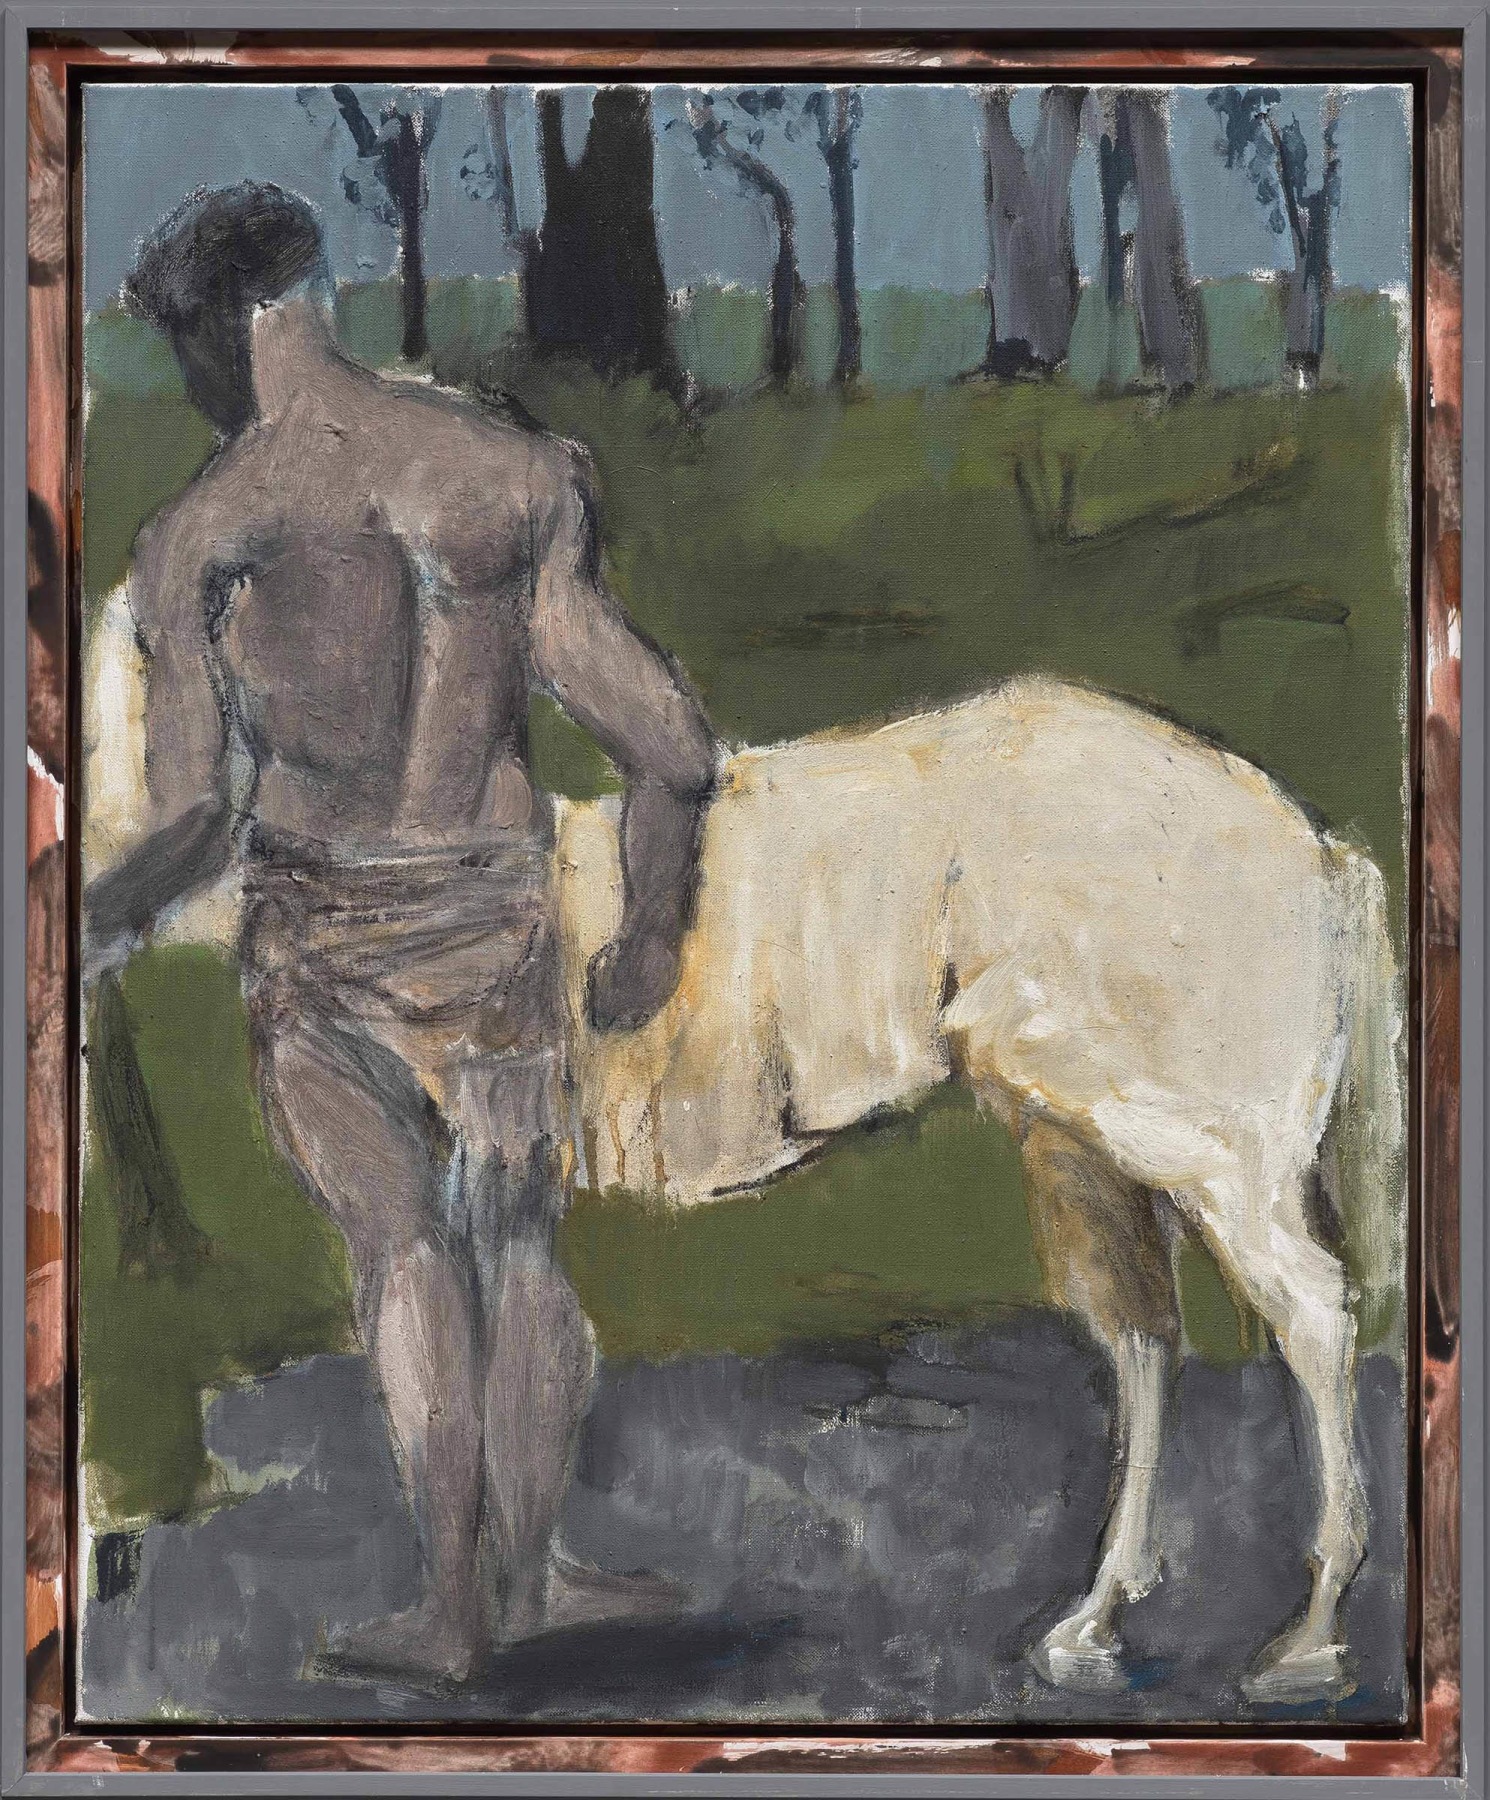 Markus L&amp;uuml;pertz

&amp;ldquo;Wei&amp;szlig;es Pferd (White Horse)&amp;rdquo;, 2017

Mixed media on canvas in artist&amp;rsquo;s frame

39 1/4 x 32 inches

100 x 81 cm

ML 2267